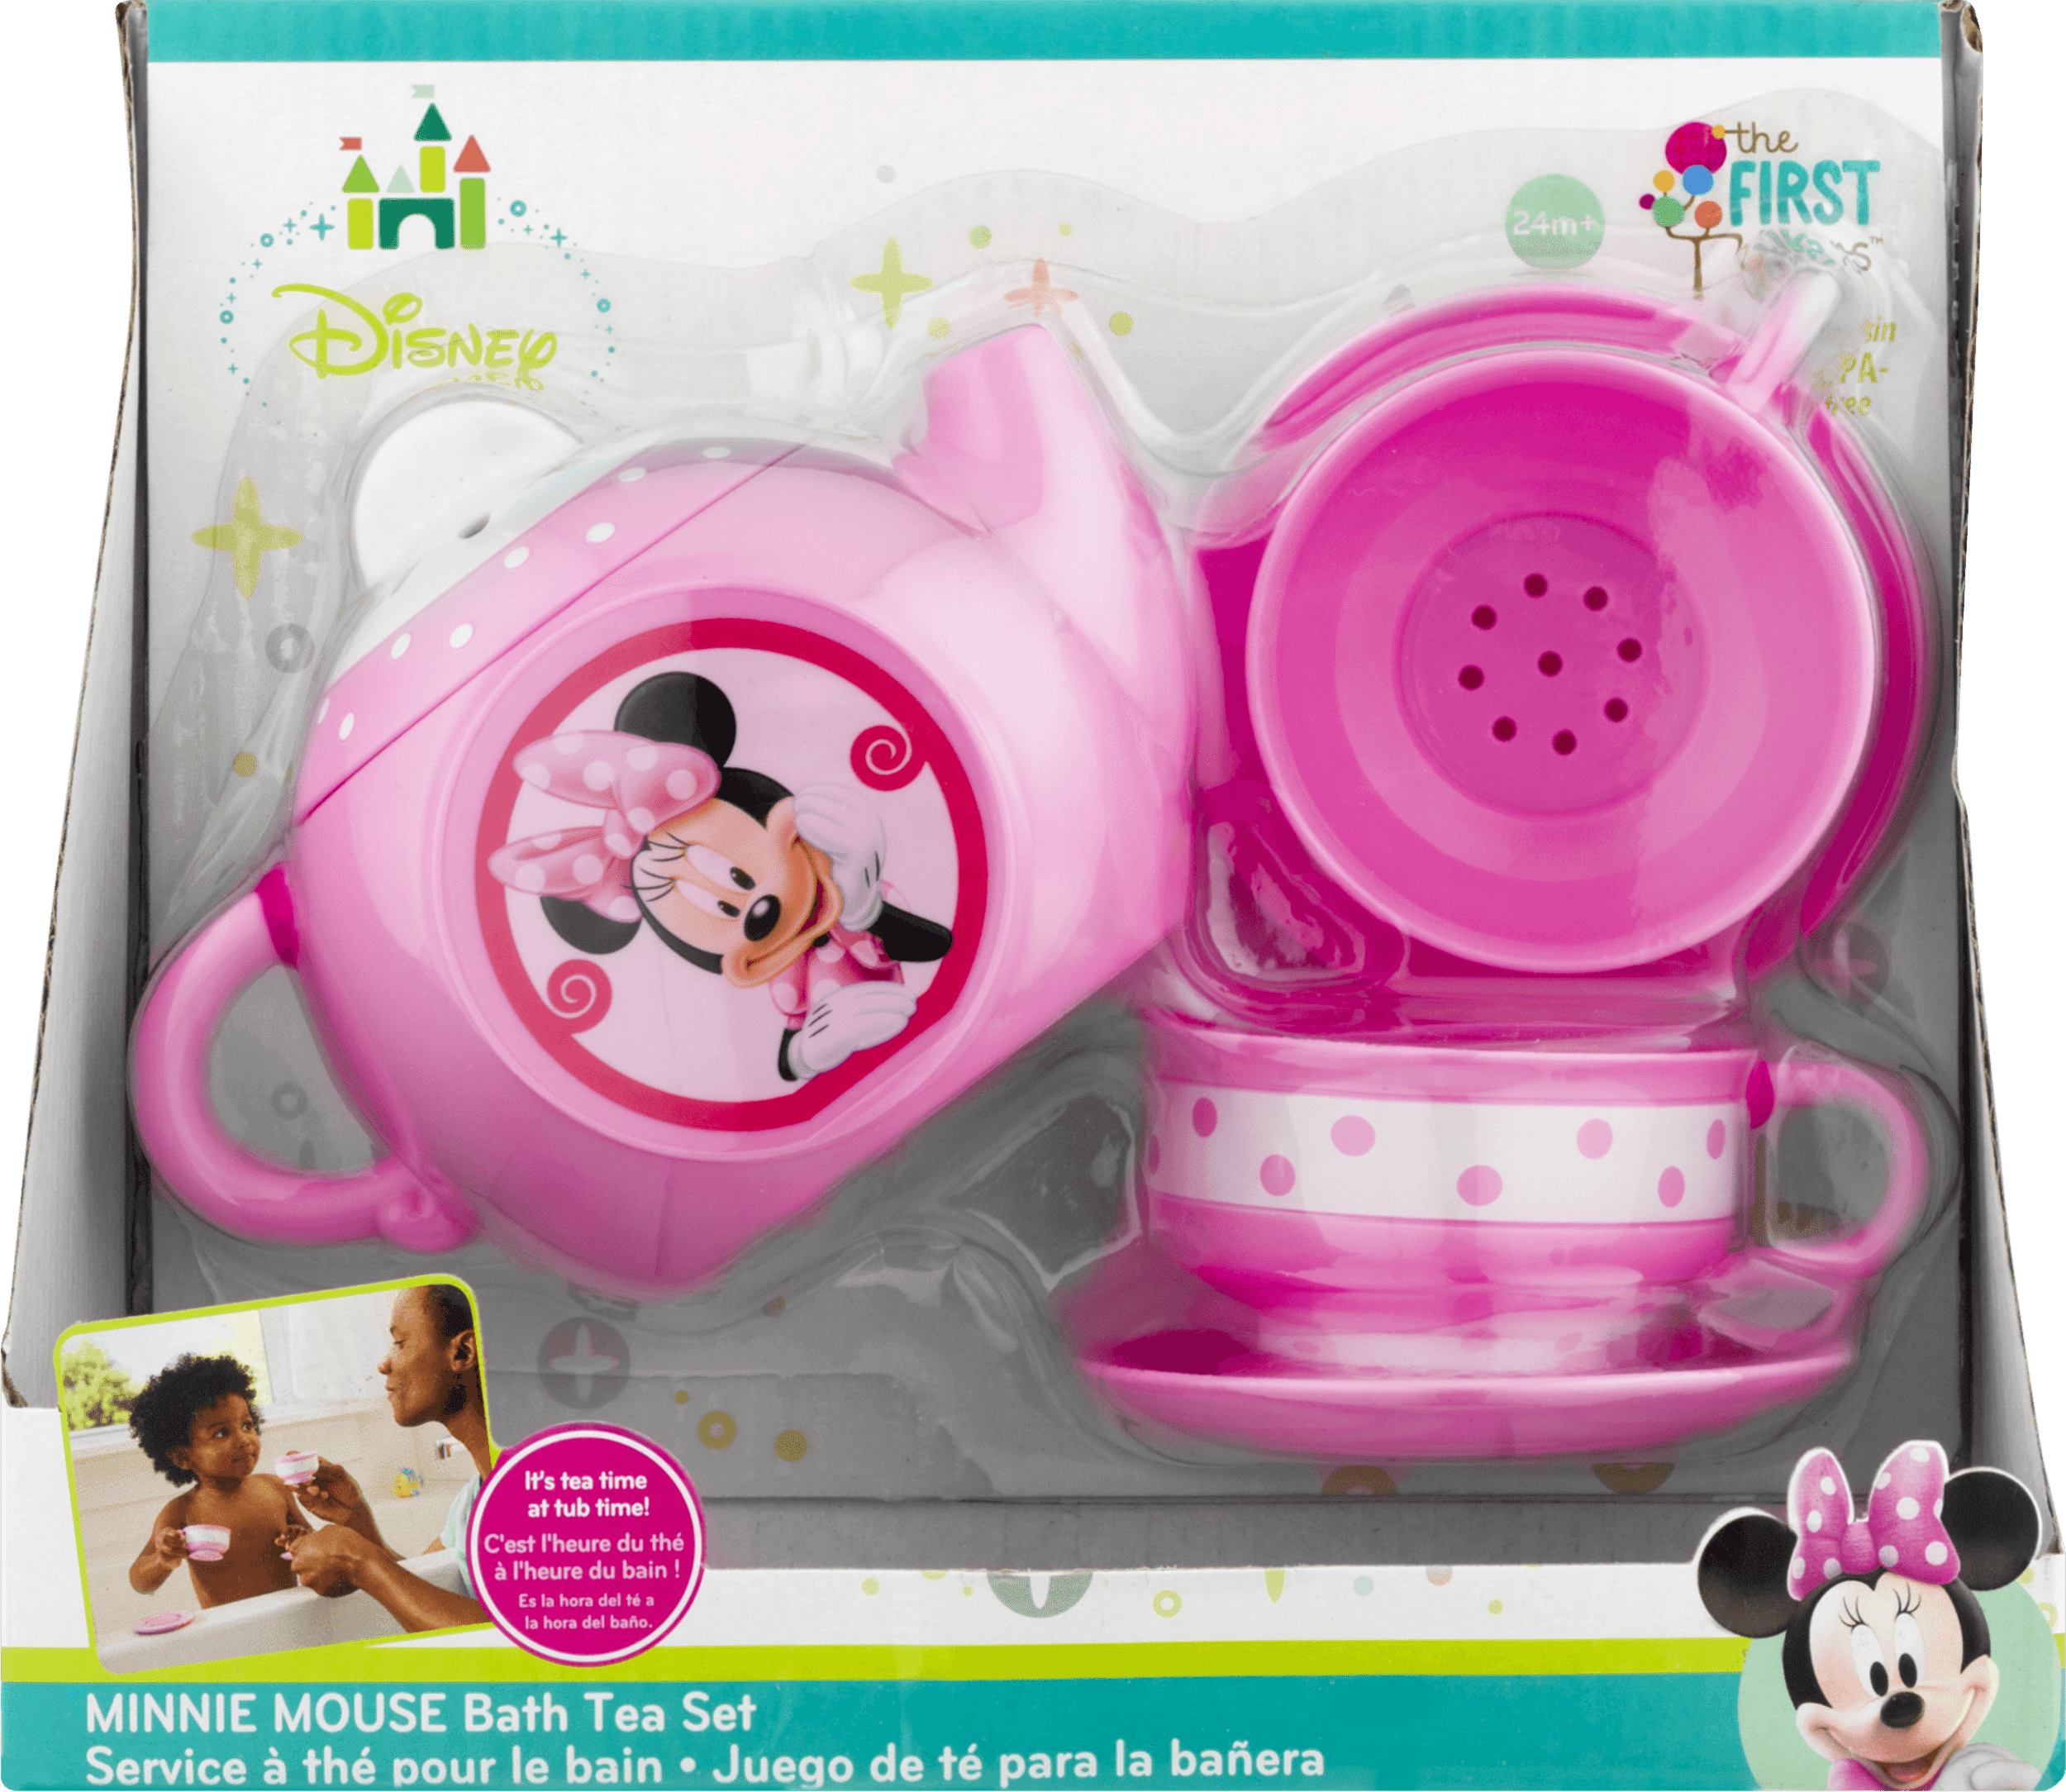 The First Years Disney Baby Minnie Mouse Bath Tea Set